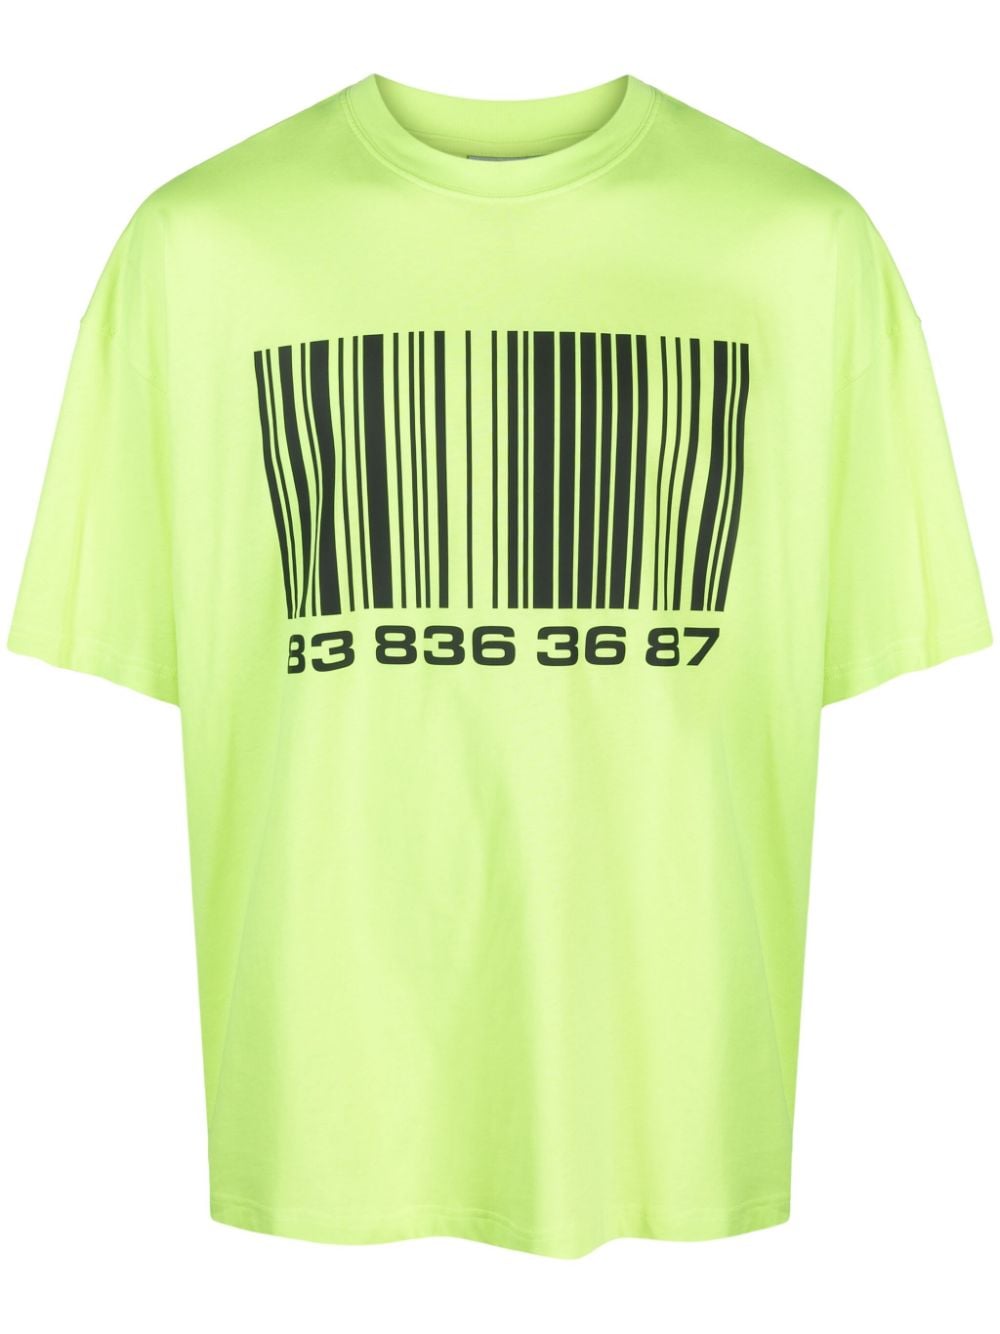 vtmnts t-shirt à imprimé code-barres - jaune